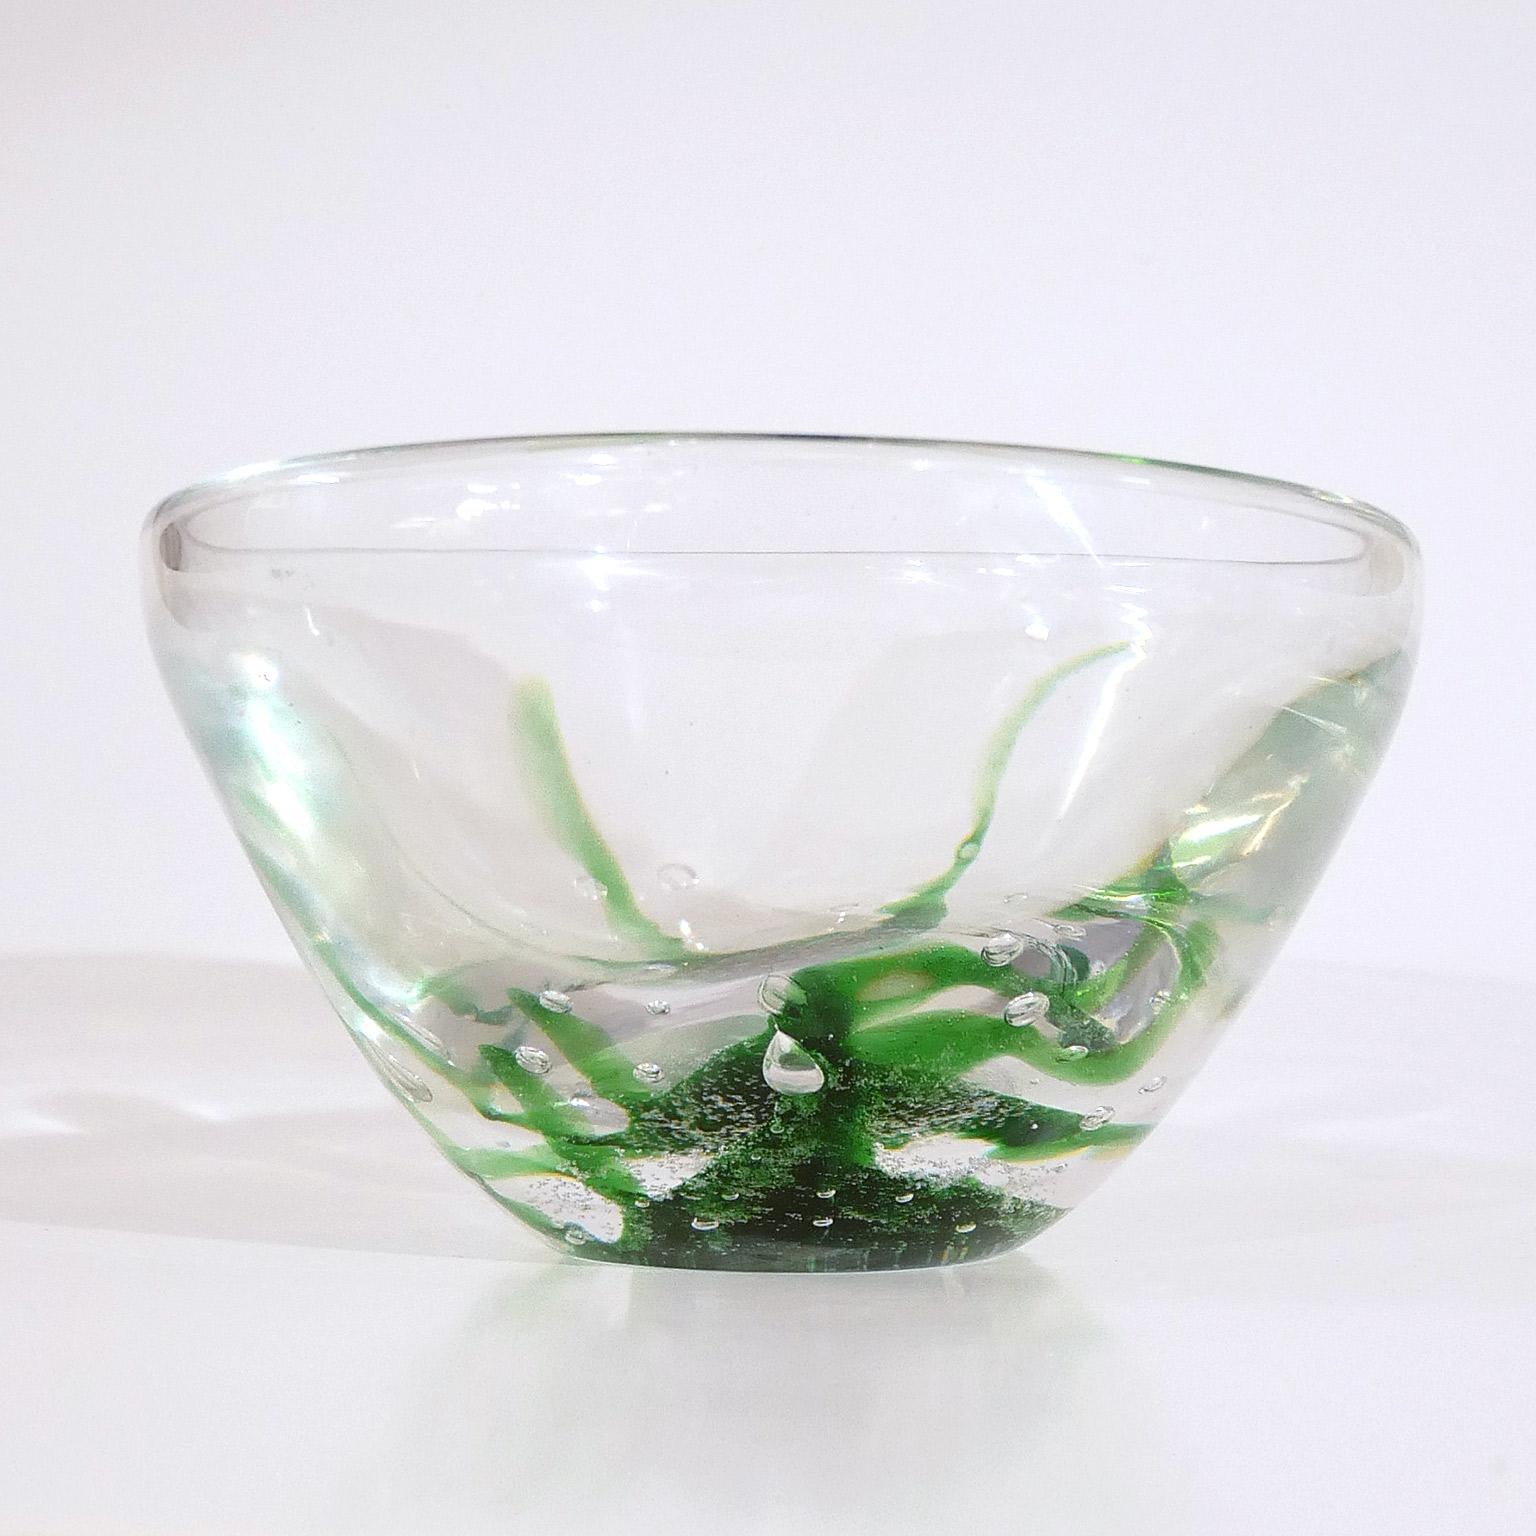 Beautiful bowl designed by Swedish artist Vicke Lindstrand for Kosta Glasbruk.
Signed 